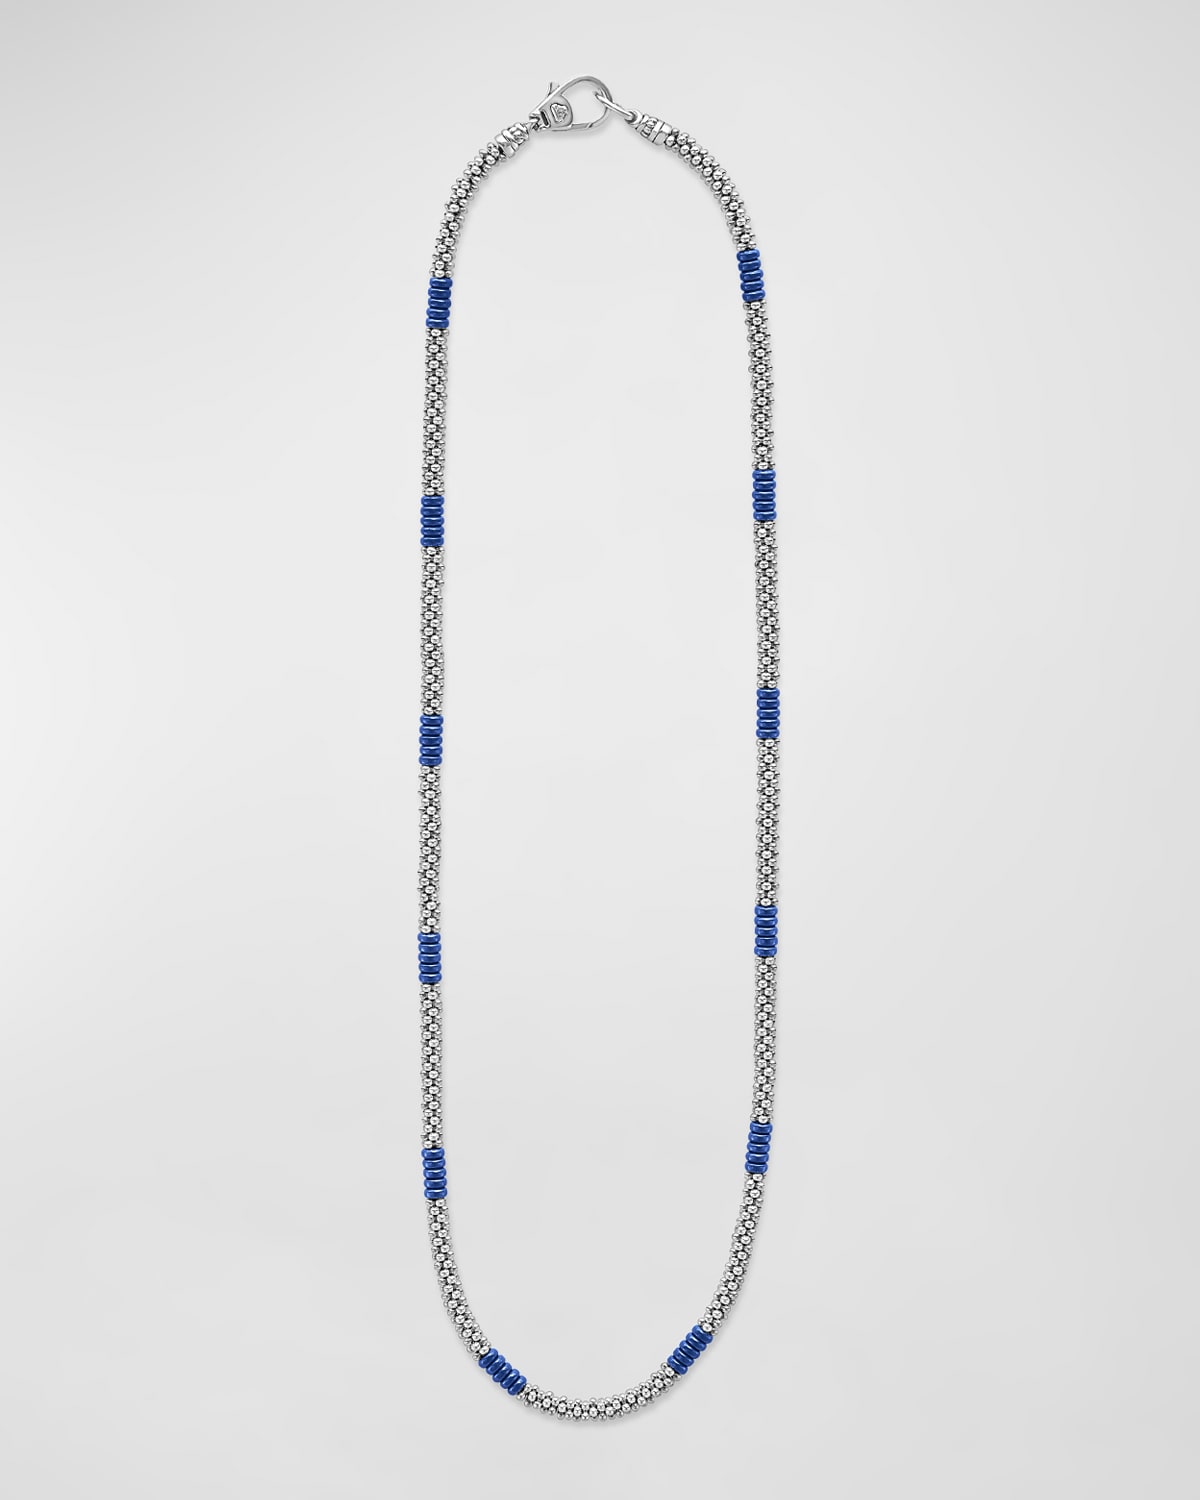 Blue Caviar Marine Ceramic 12-Station 3mm Rope Necklace, 16"L